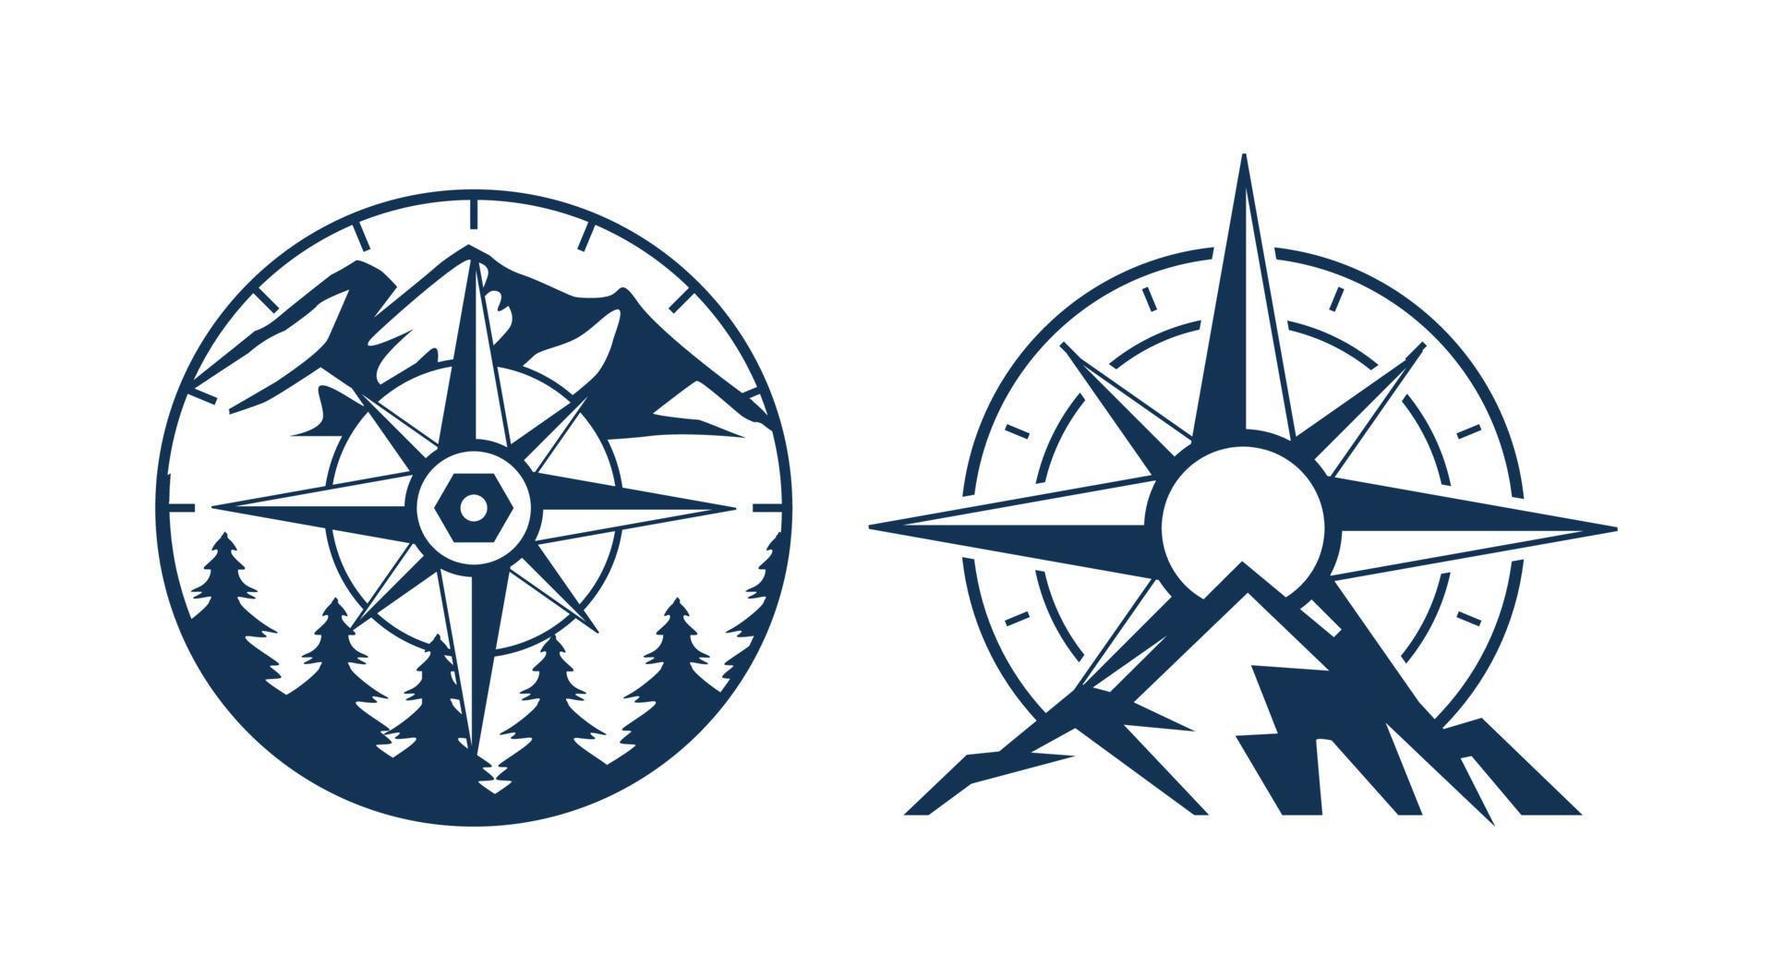 montagna bussola logo design modello. bussola silhouette logo clipart. avventura logo vettore